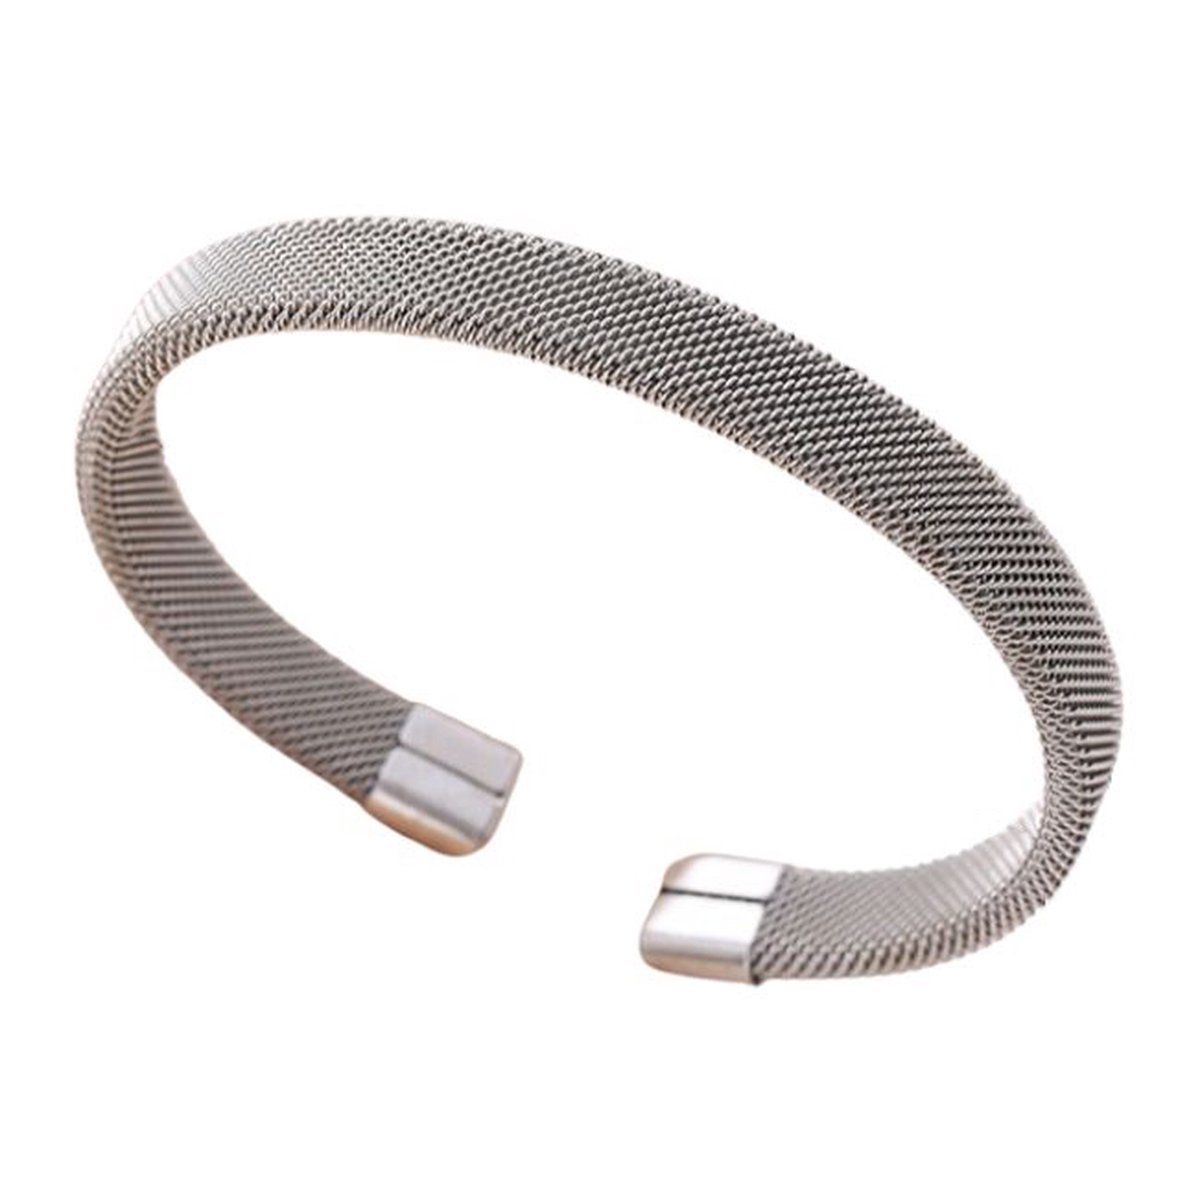 Marama - armband Amanda zilver - bangle - damesarmband - RVS - zilver plated - nikkelvrij - licht buigbaar